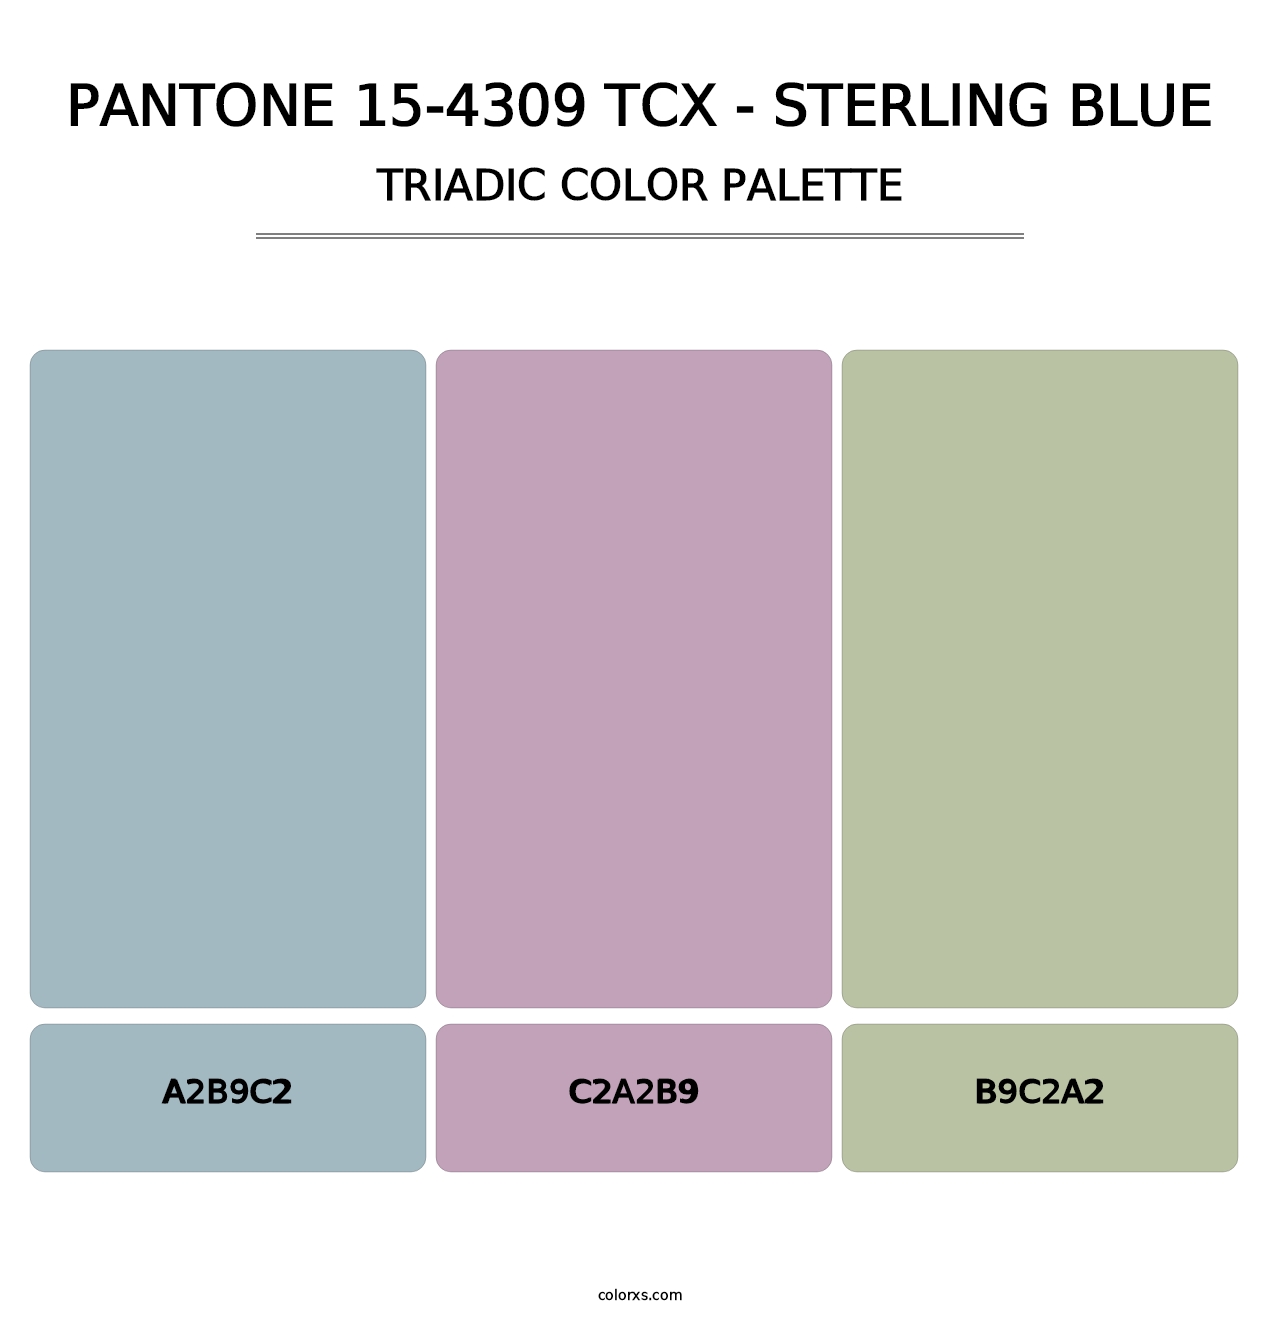 PANTONE 15-4309 TCX - Sterling Blue - Triadic Color Palette